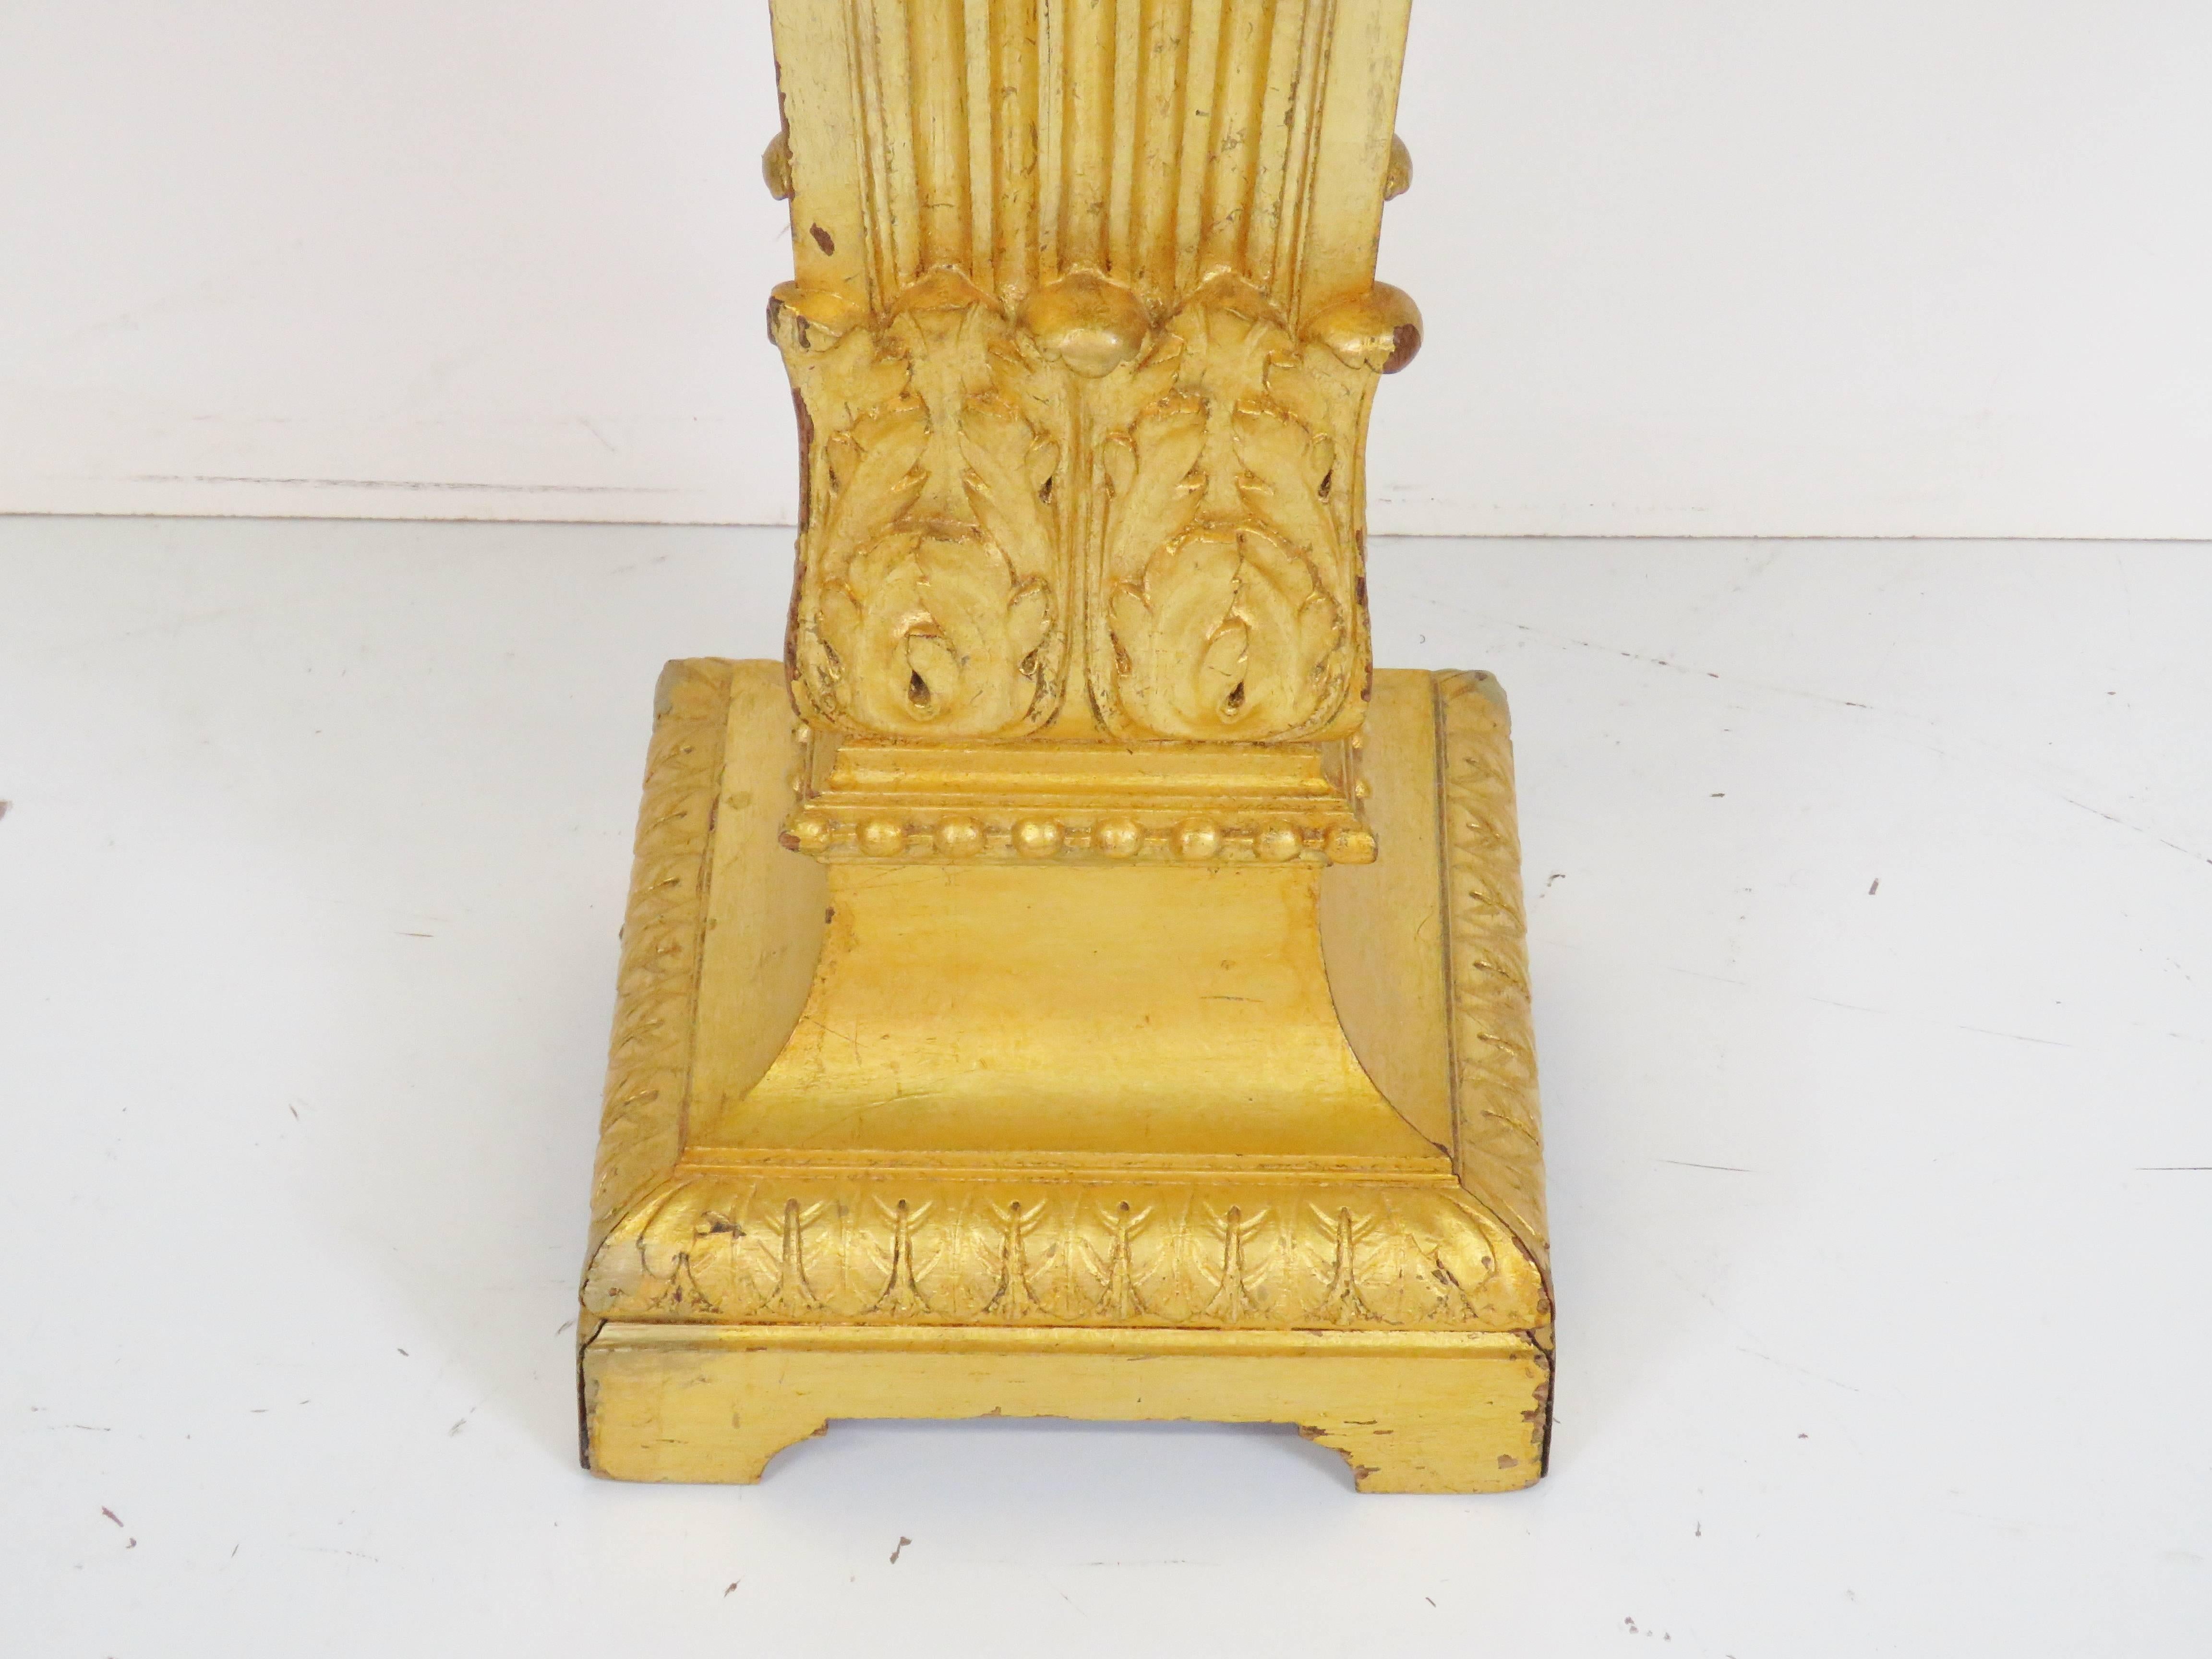 Carved wood with gold gilt pedestal. Measures: 43